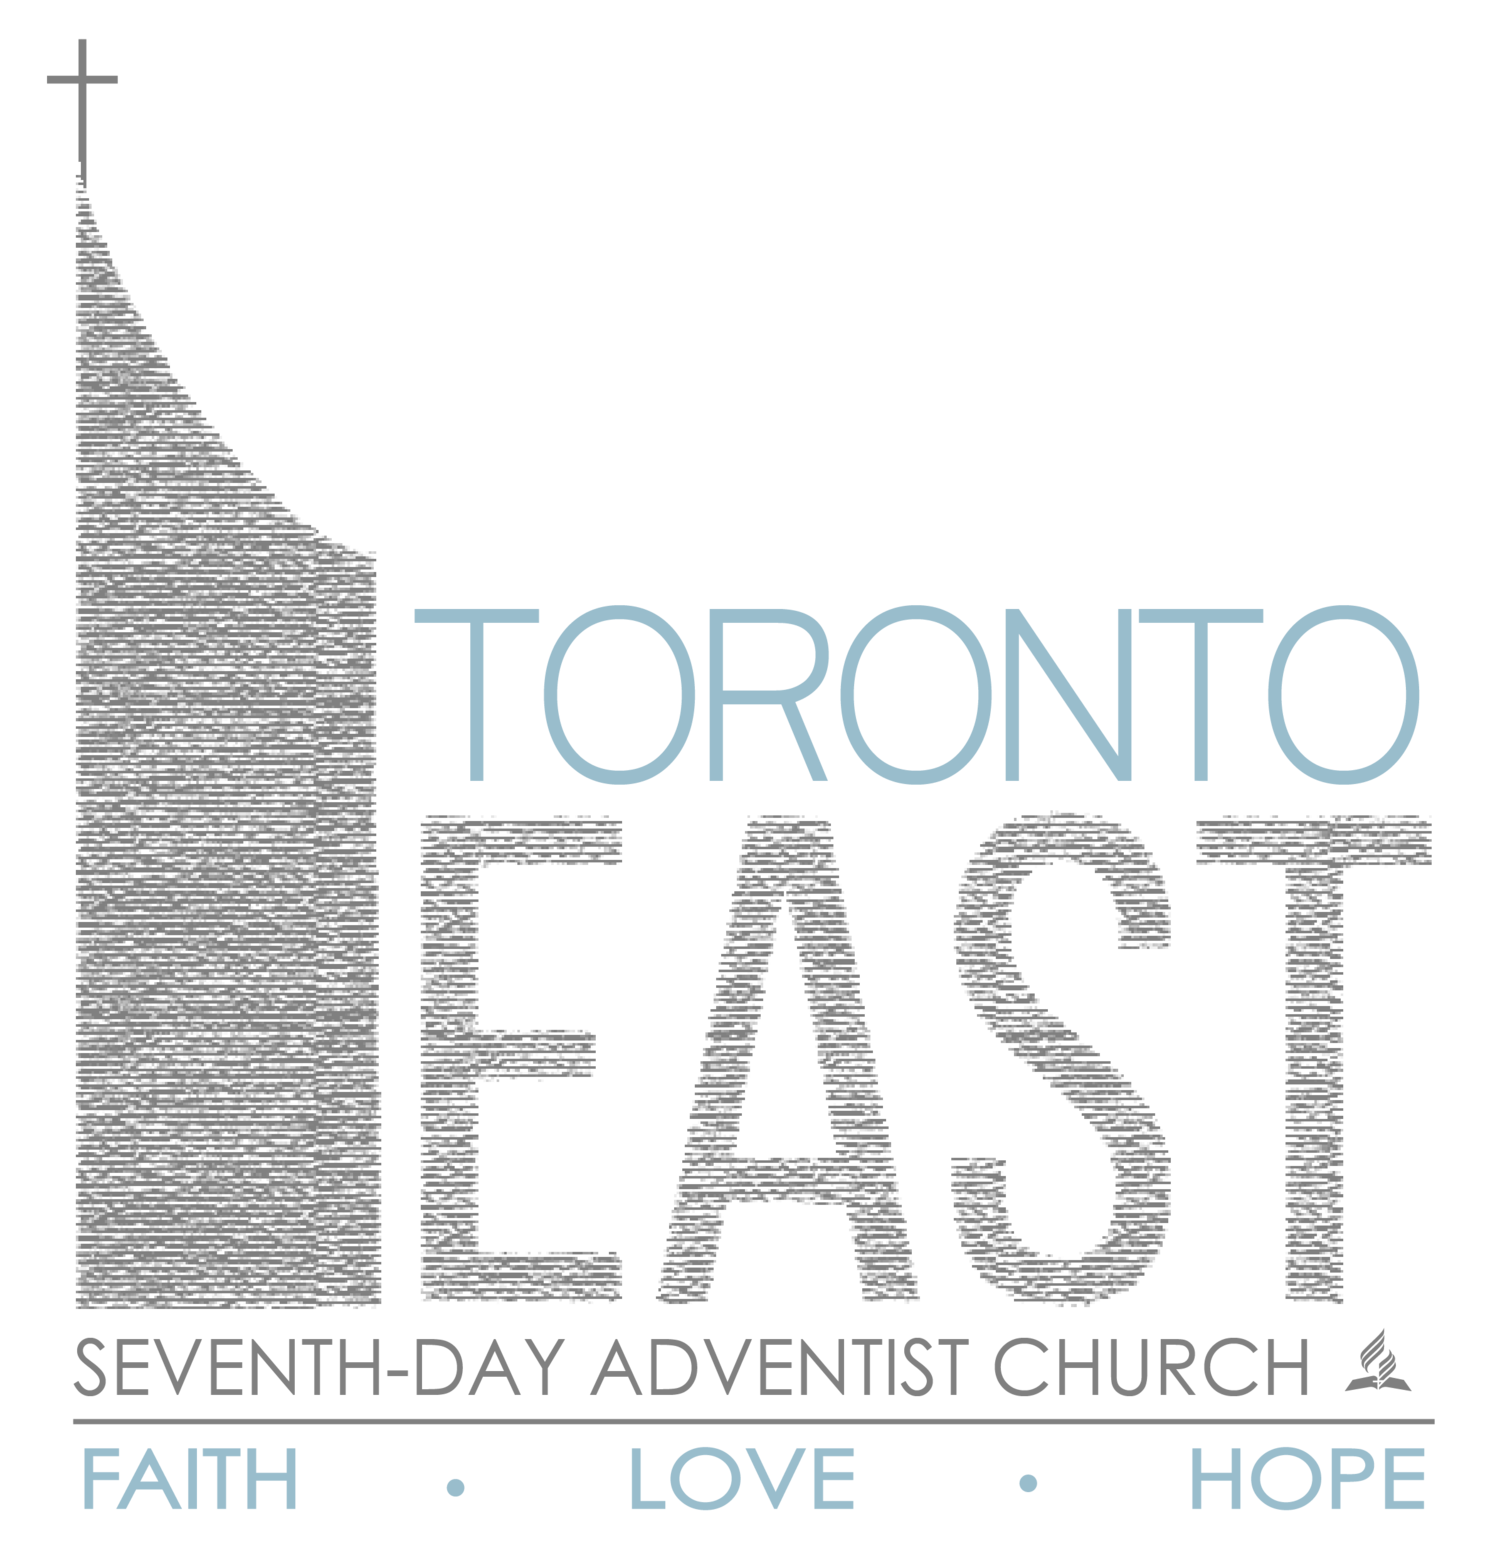 Toronto East Seventh-day Adventist Church